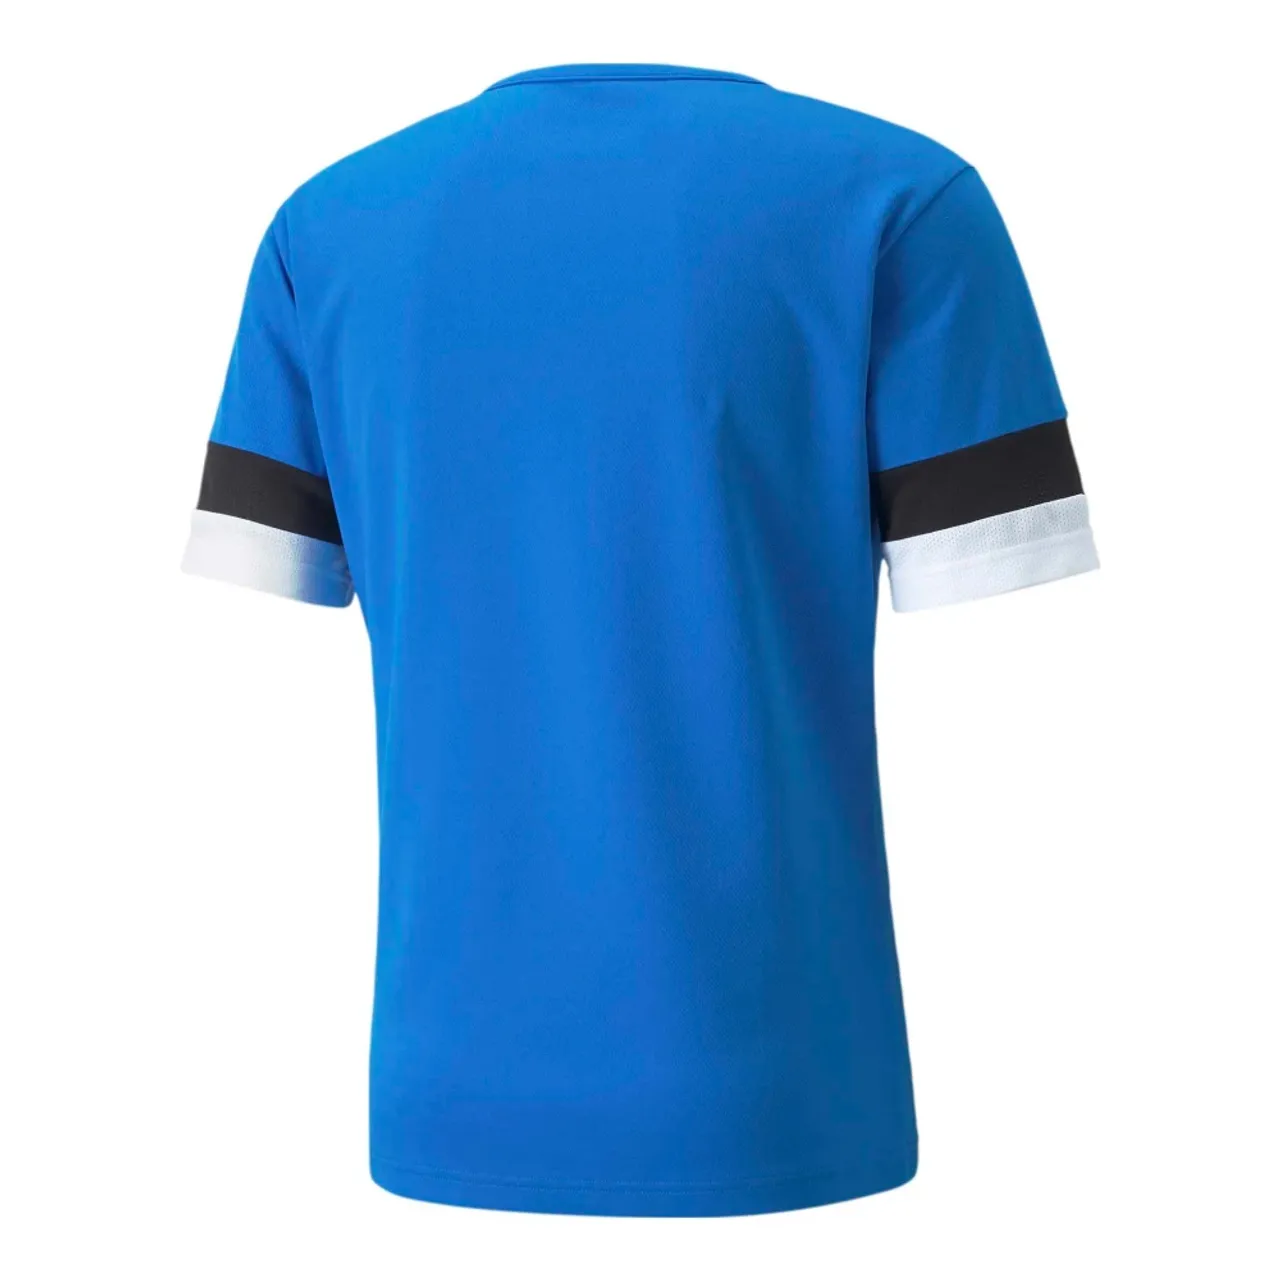 Teamrise Jersey blaues T-Shirt Puma